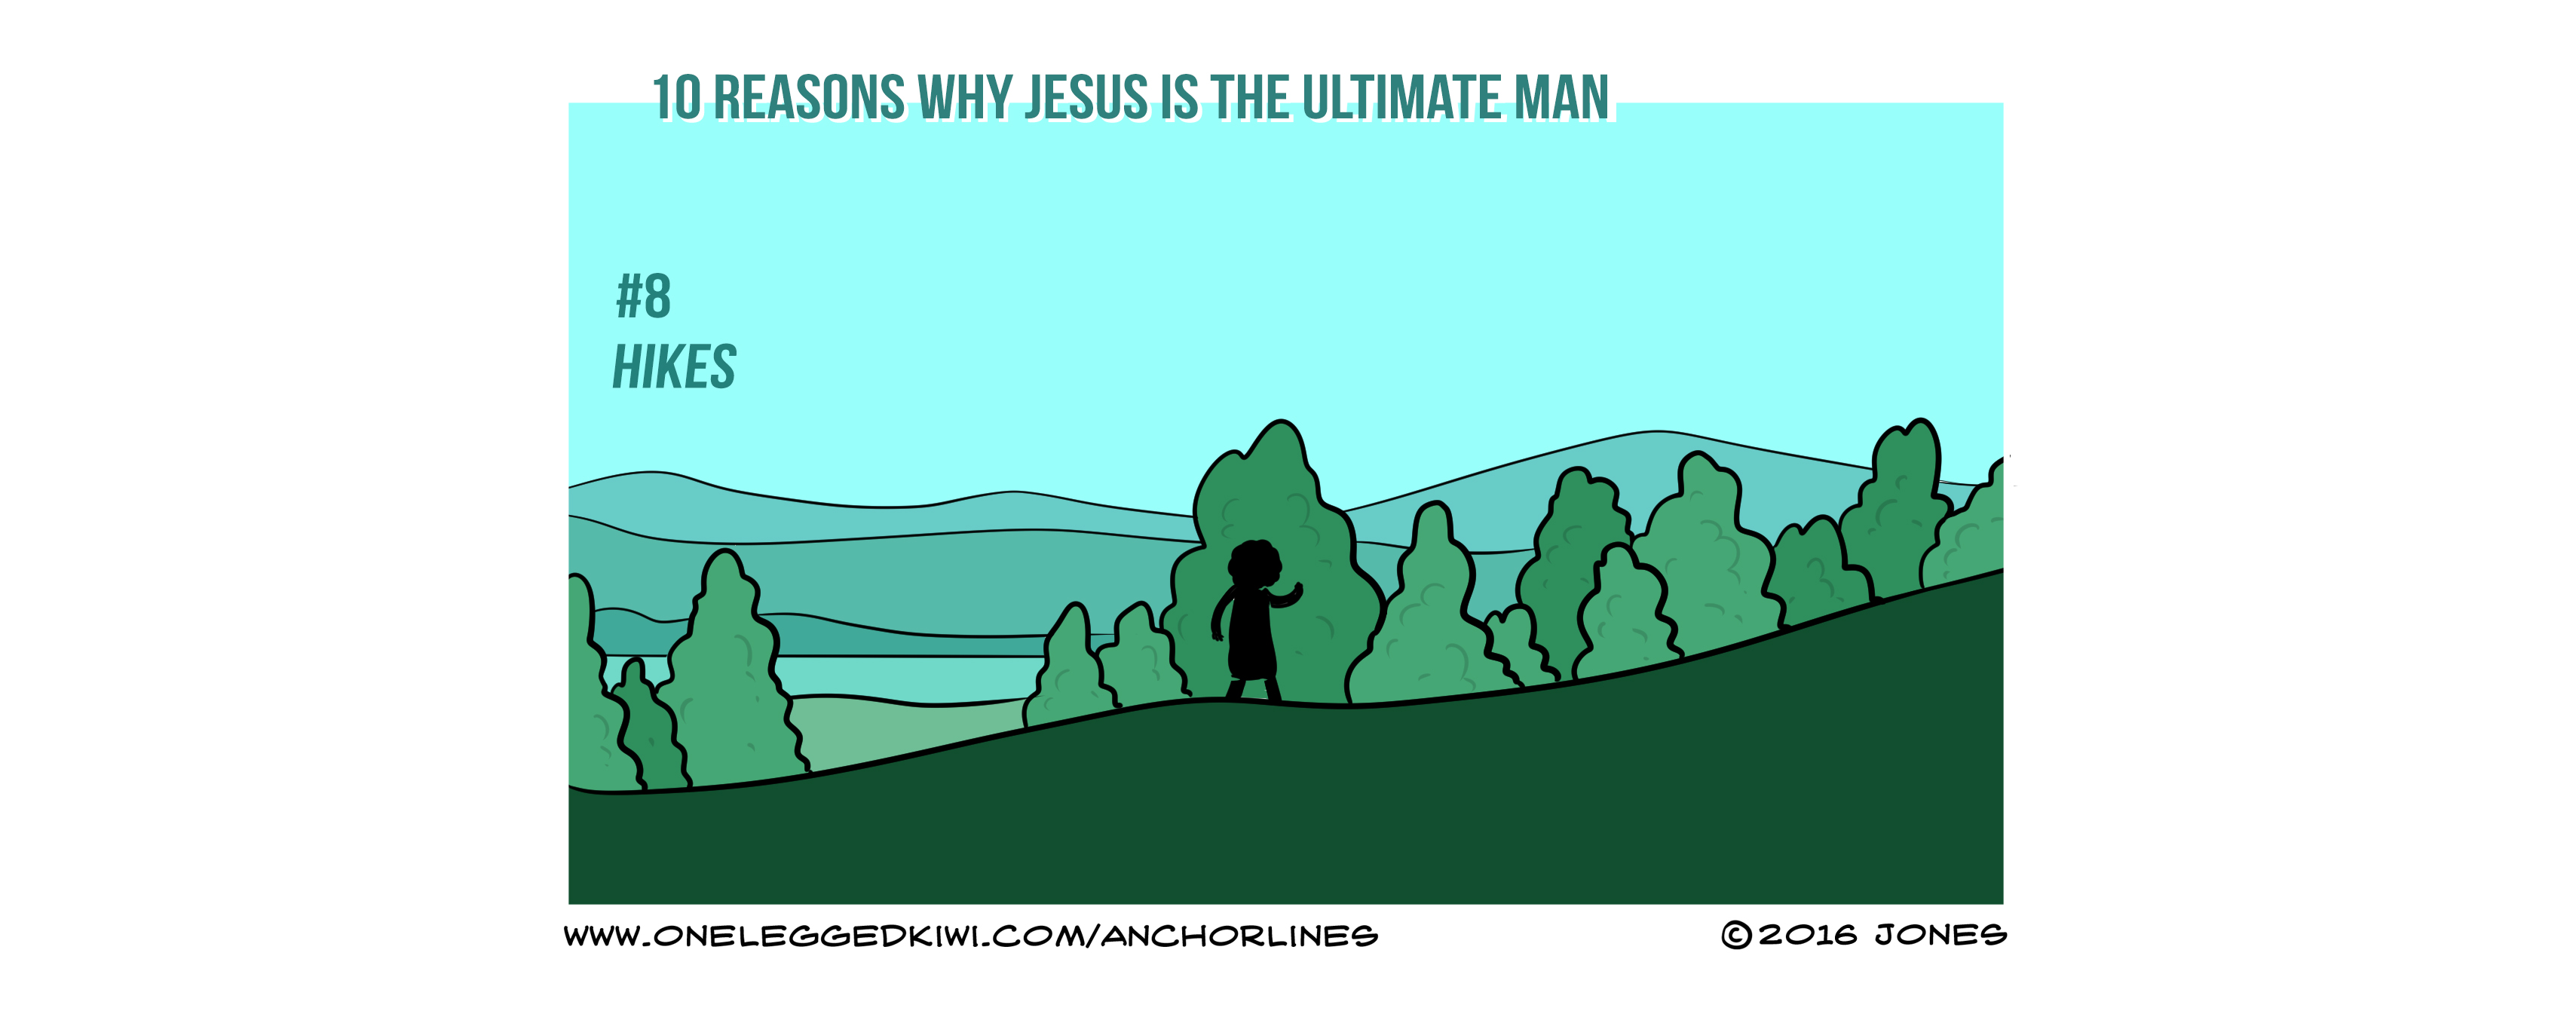 Jesus, noted hiking enthusiast